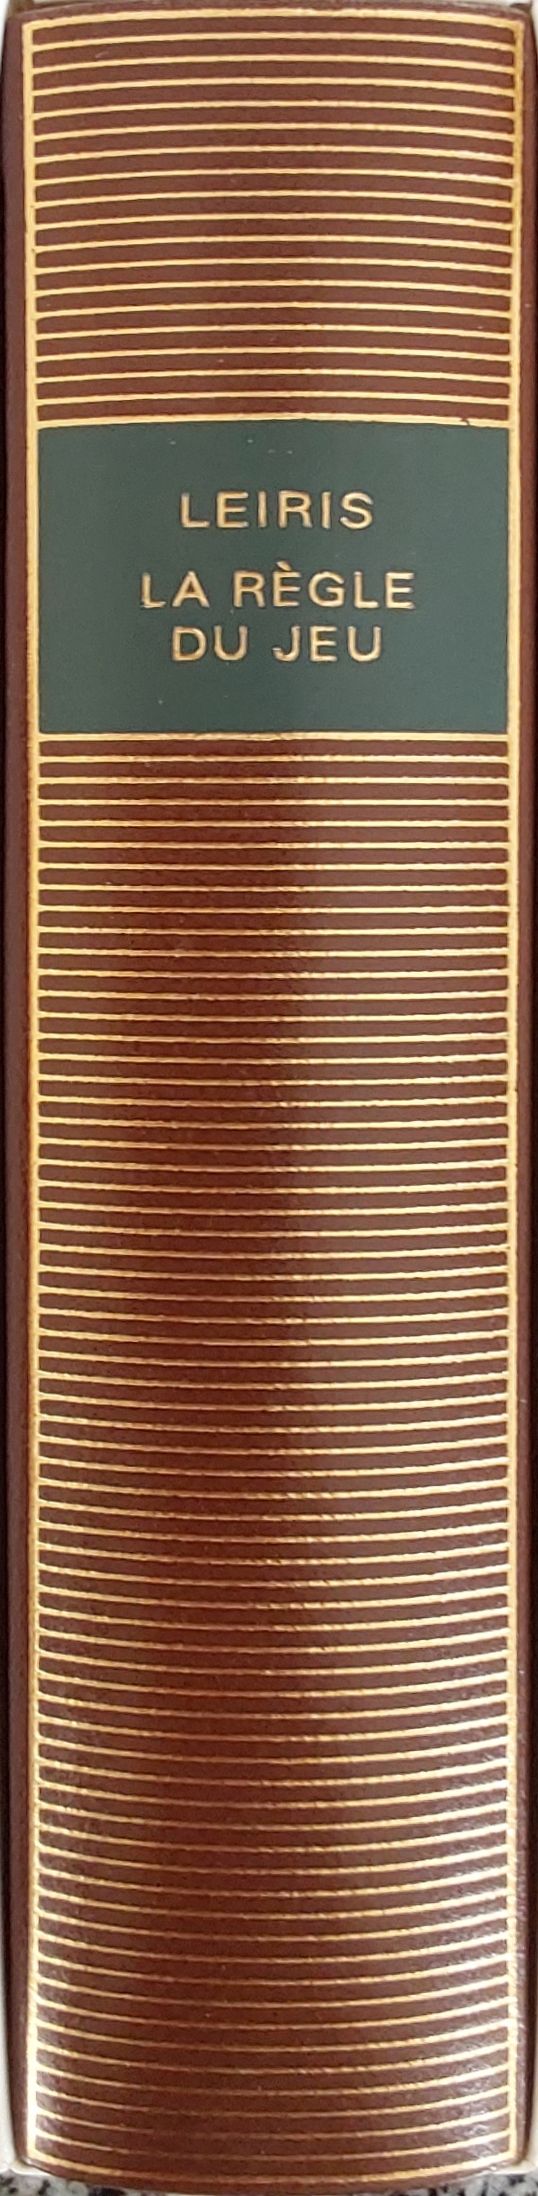 Volume 499 de Leiris dans la Bibliothèque de la Pléiade.